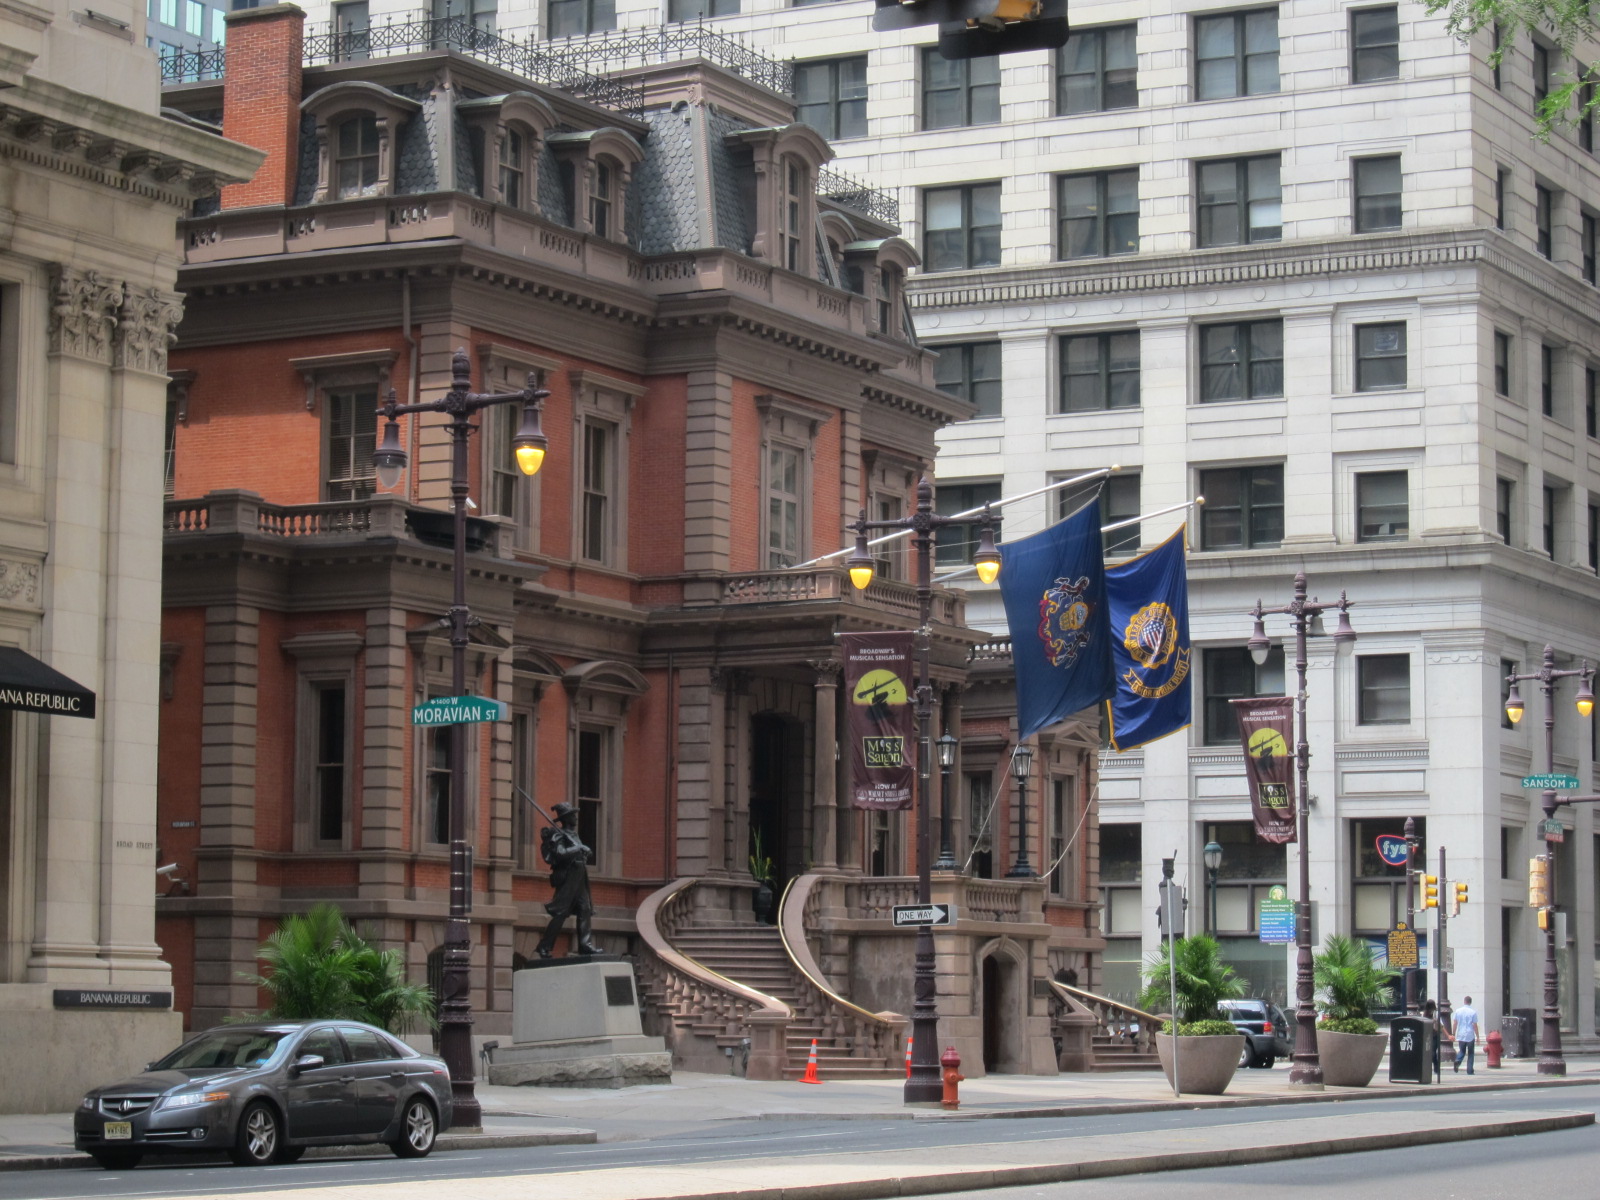 Philadelphia Brick Building with Flags